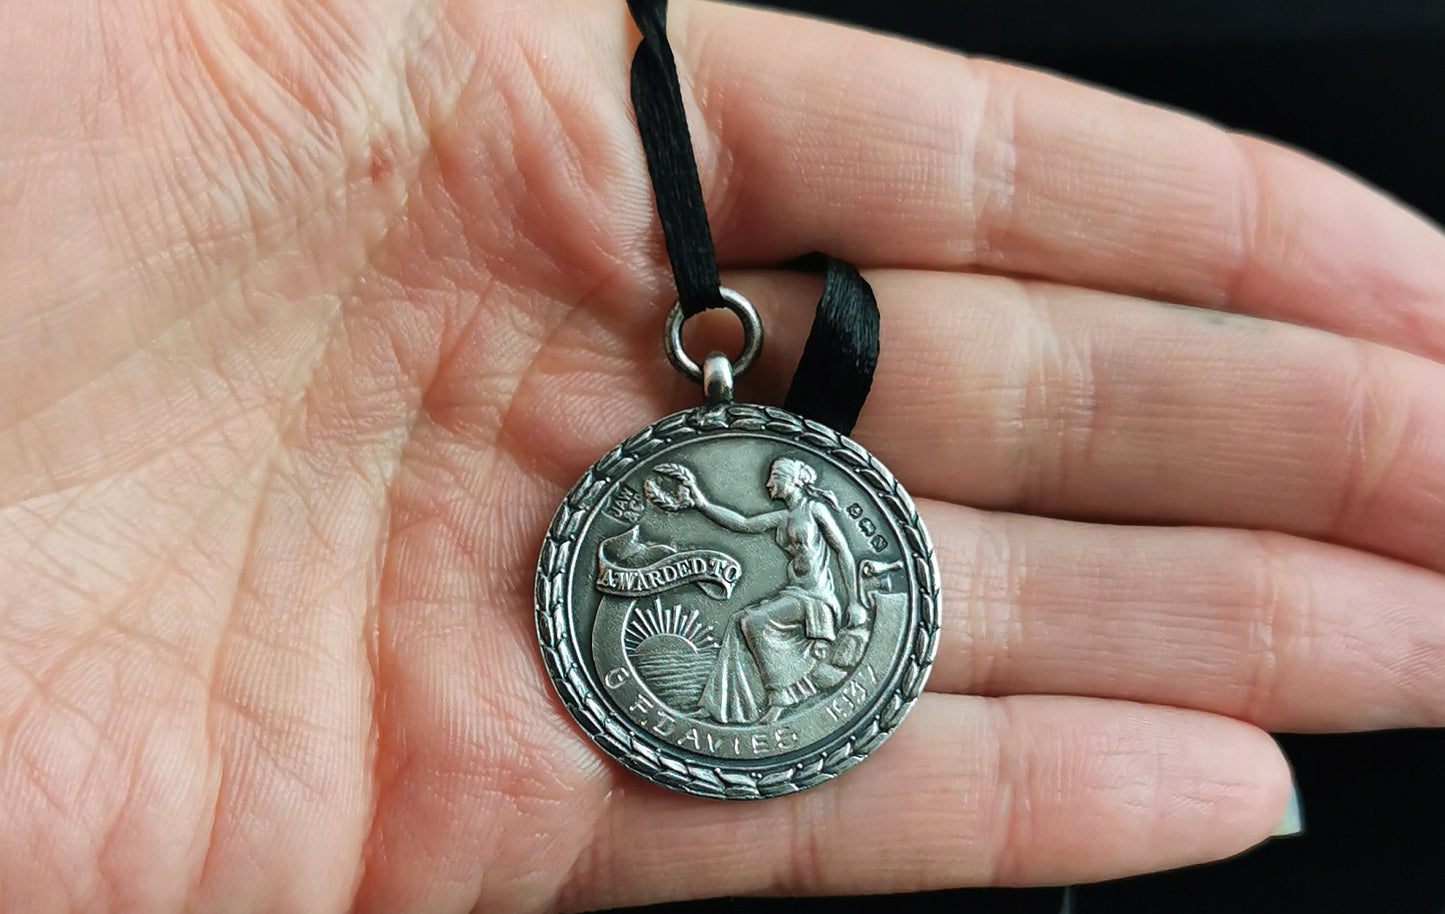 Vintage sterling silver watch fob pendant, medal, Lifesaving